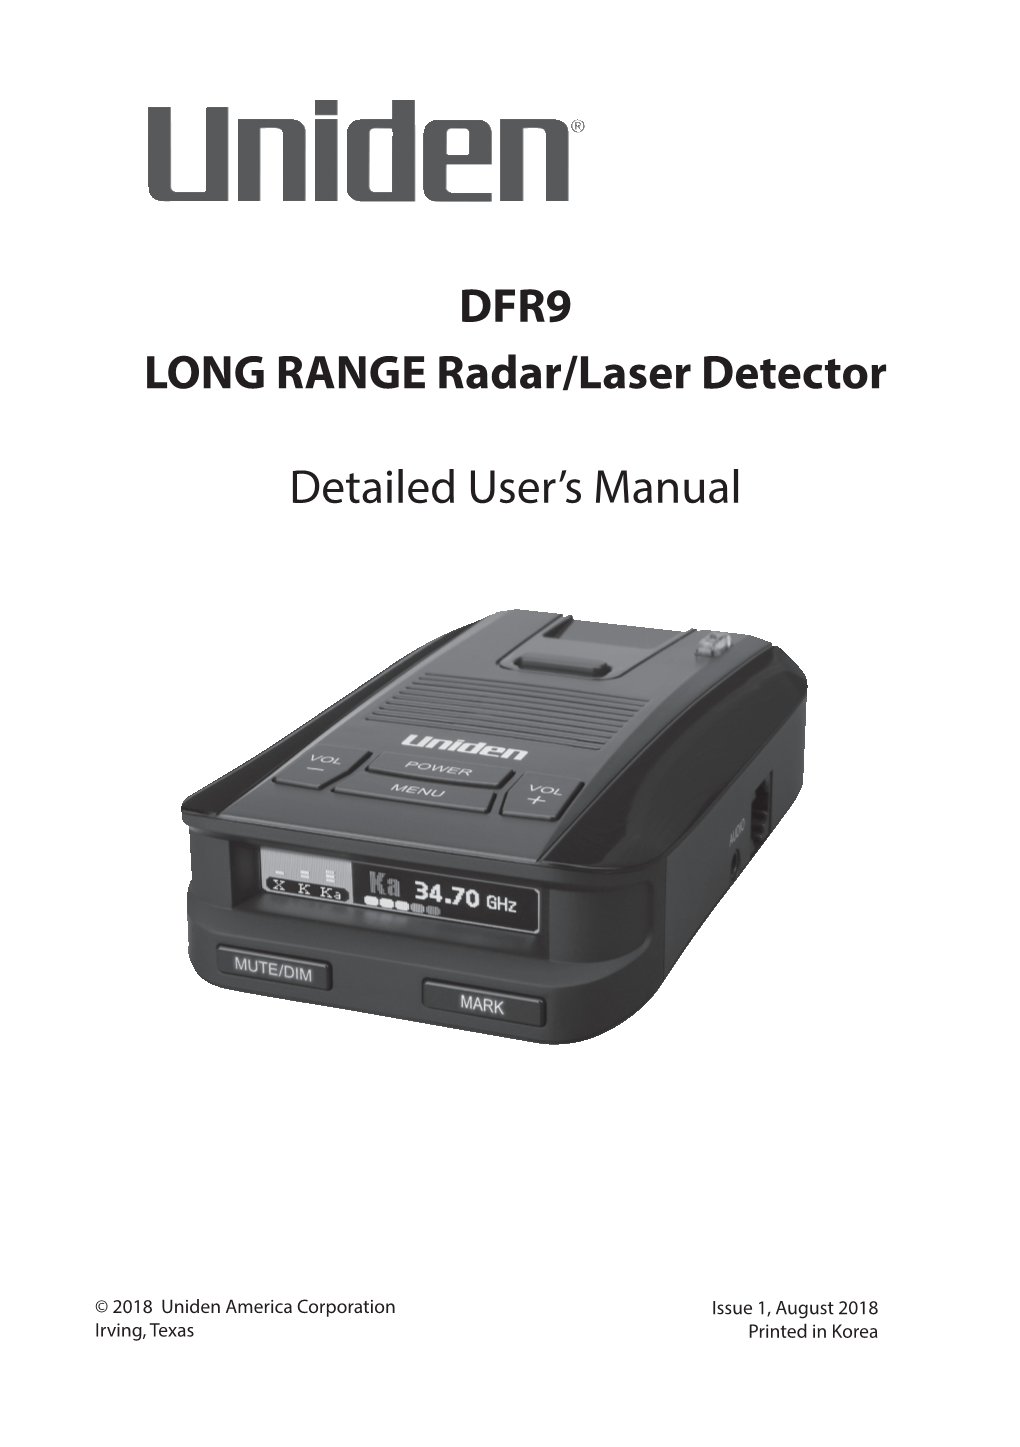 LONG RANGE Radar/Laser Detector Detailed User's Manual DFR9